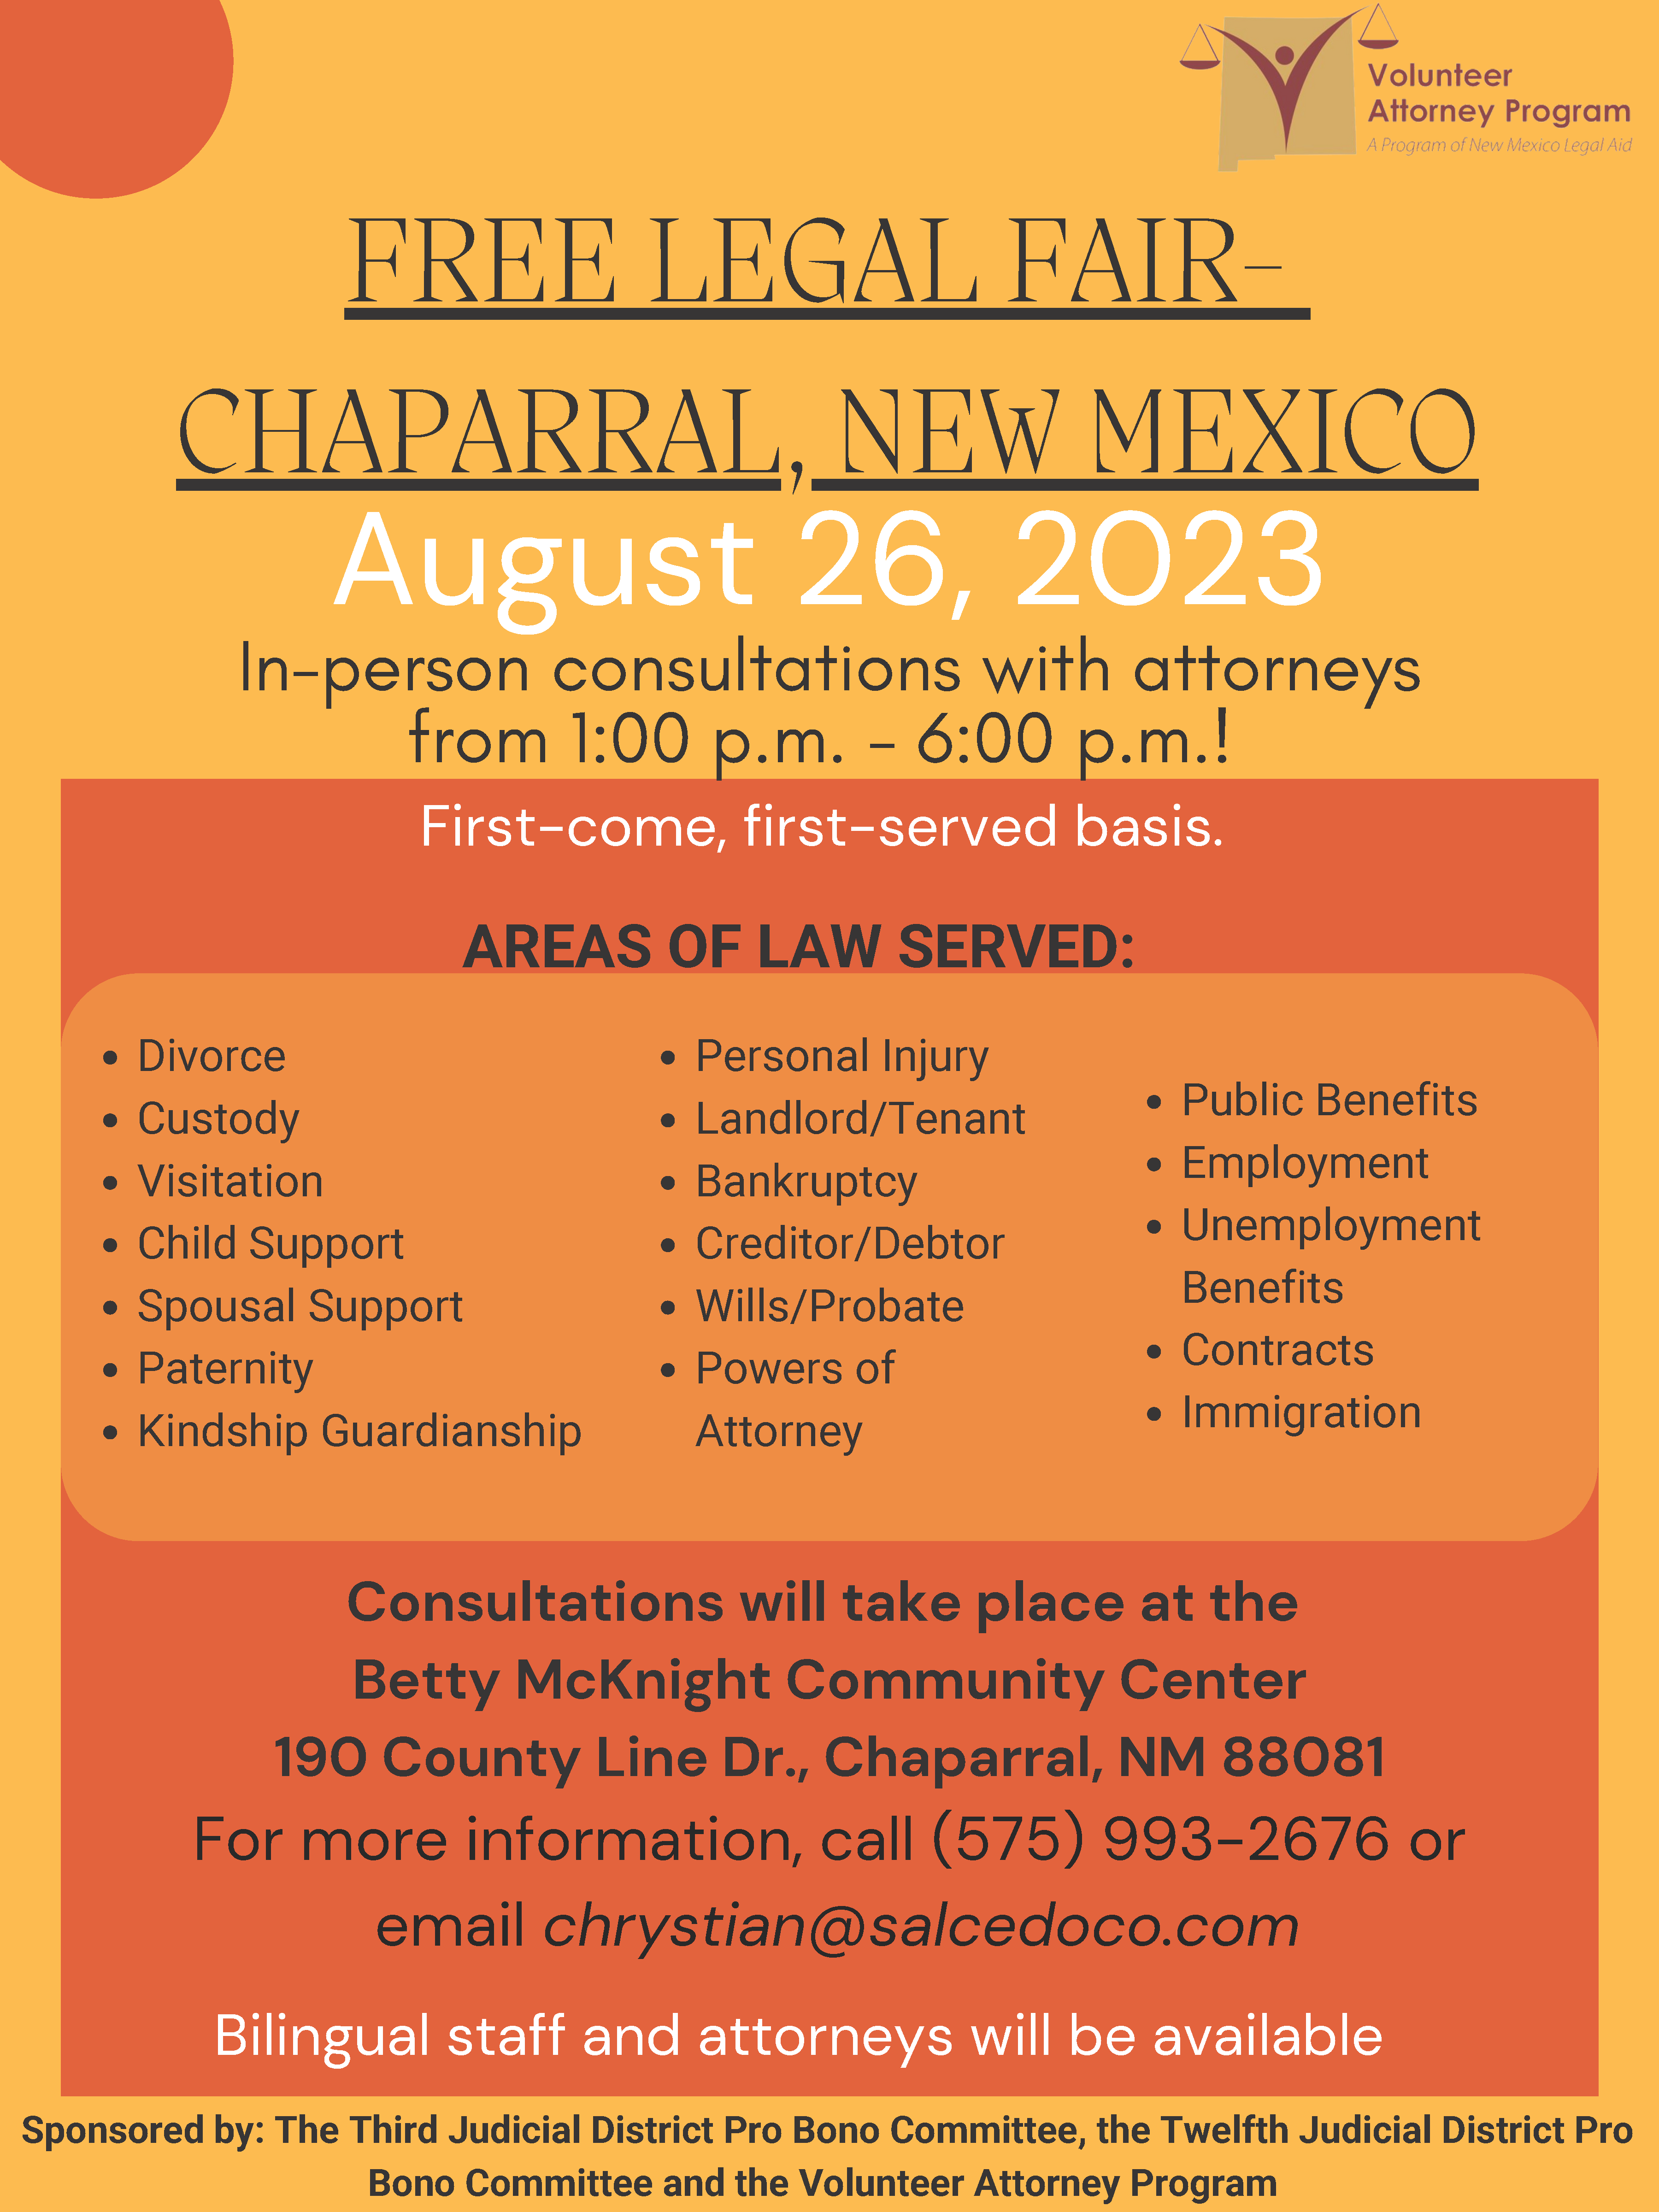 Free Legal Fair in Chaparral, New Mexico